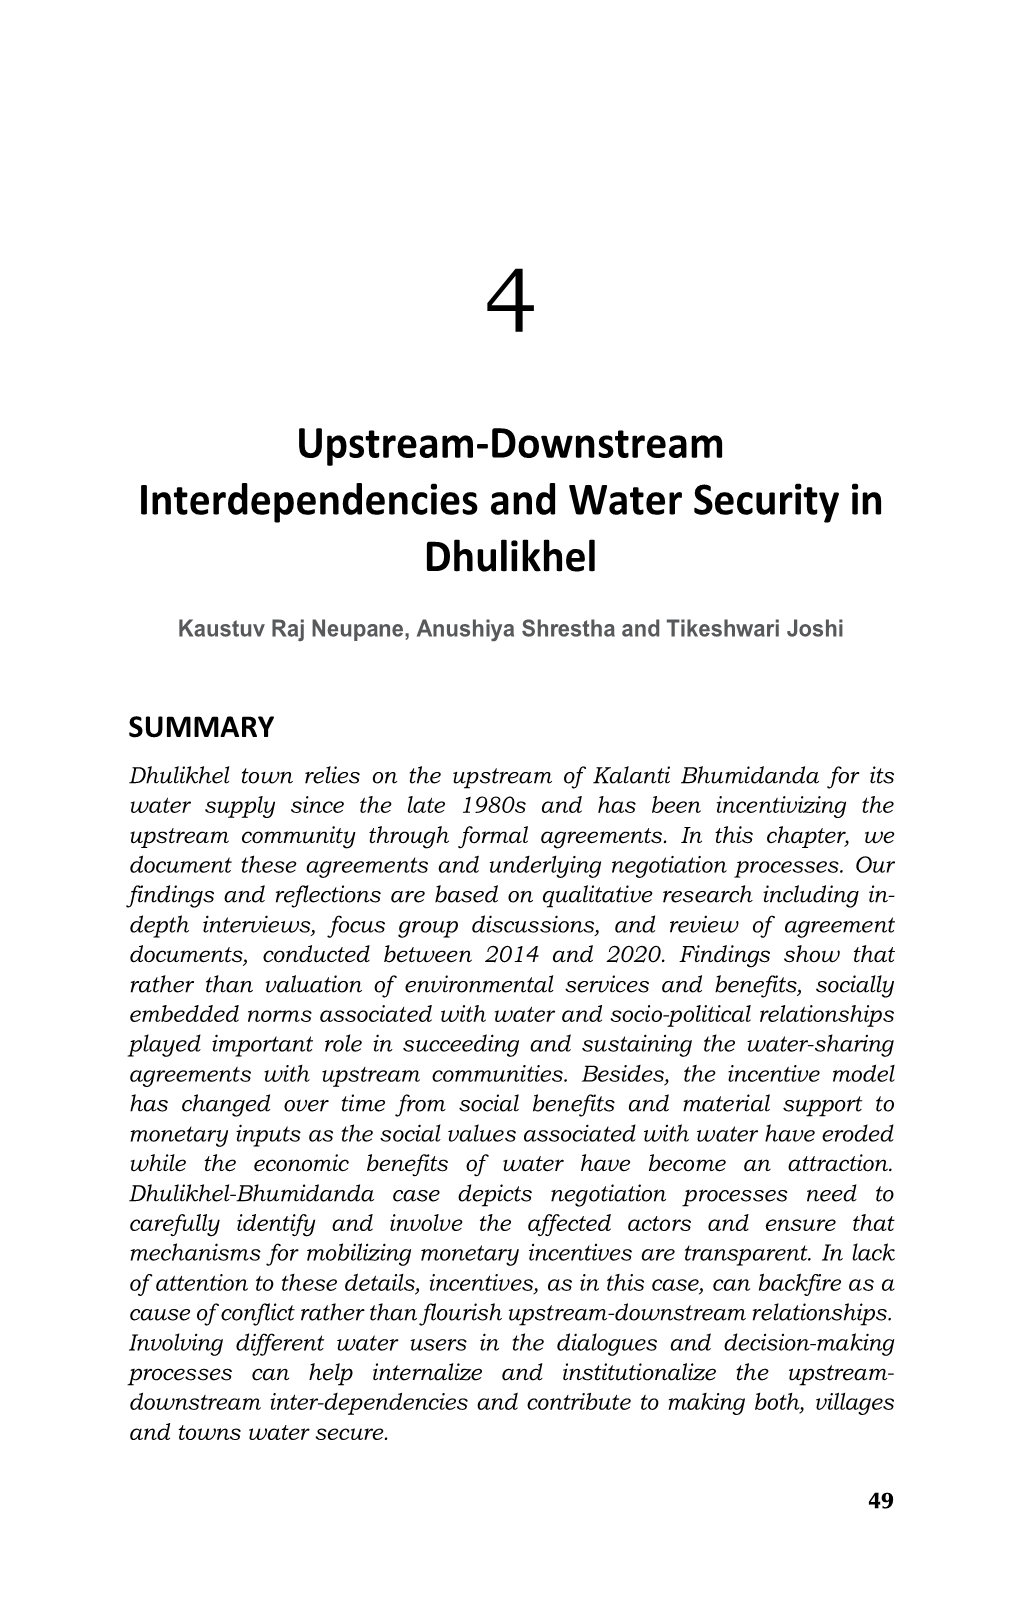 Upstream-Downstream Interdependencies and Water Security in Dhulikhel